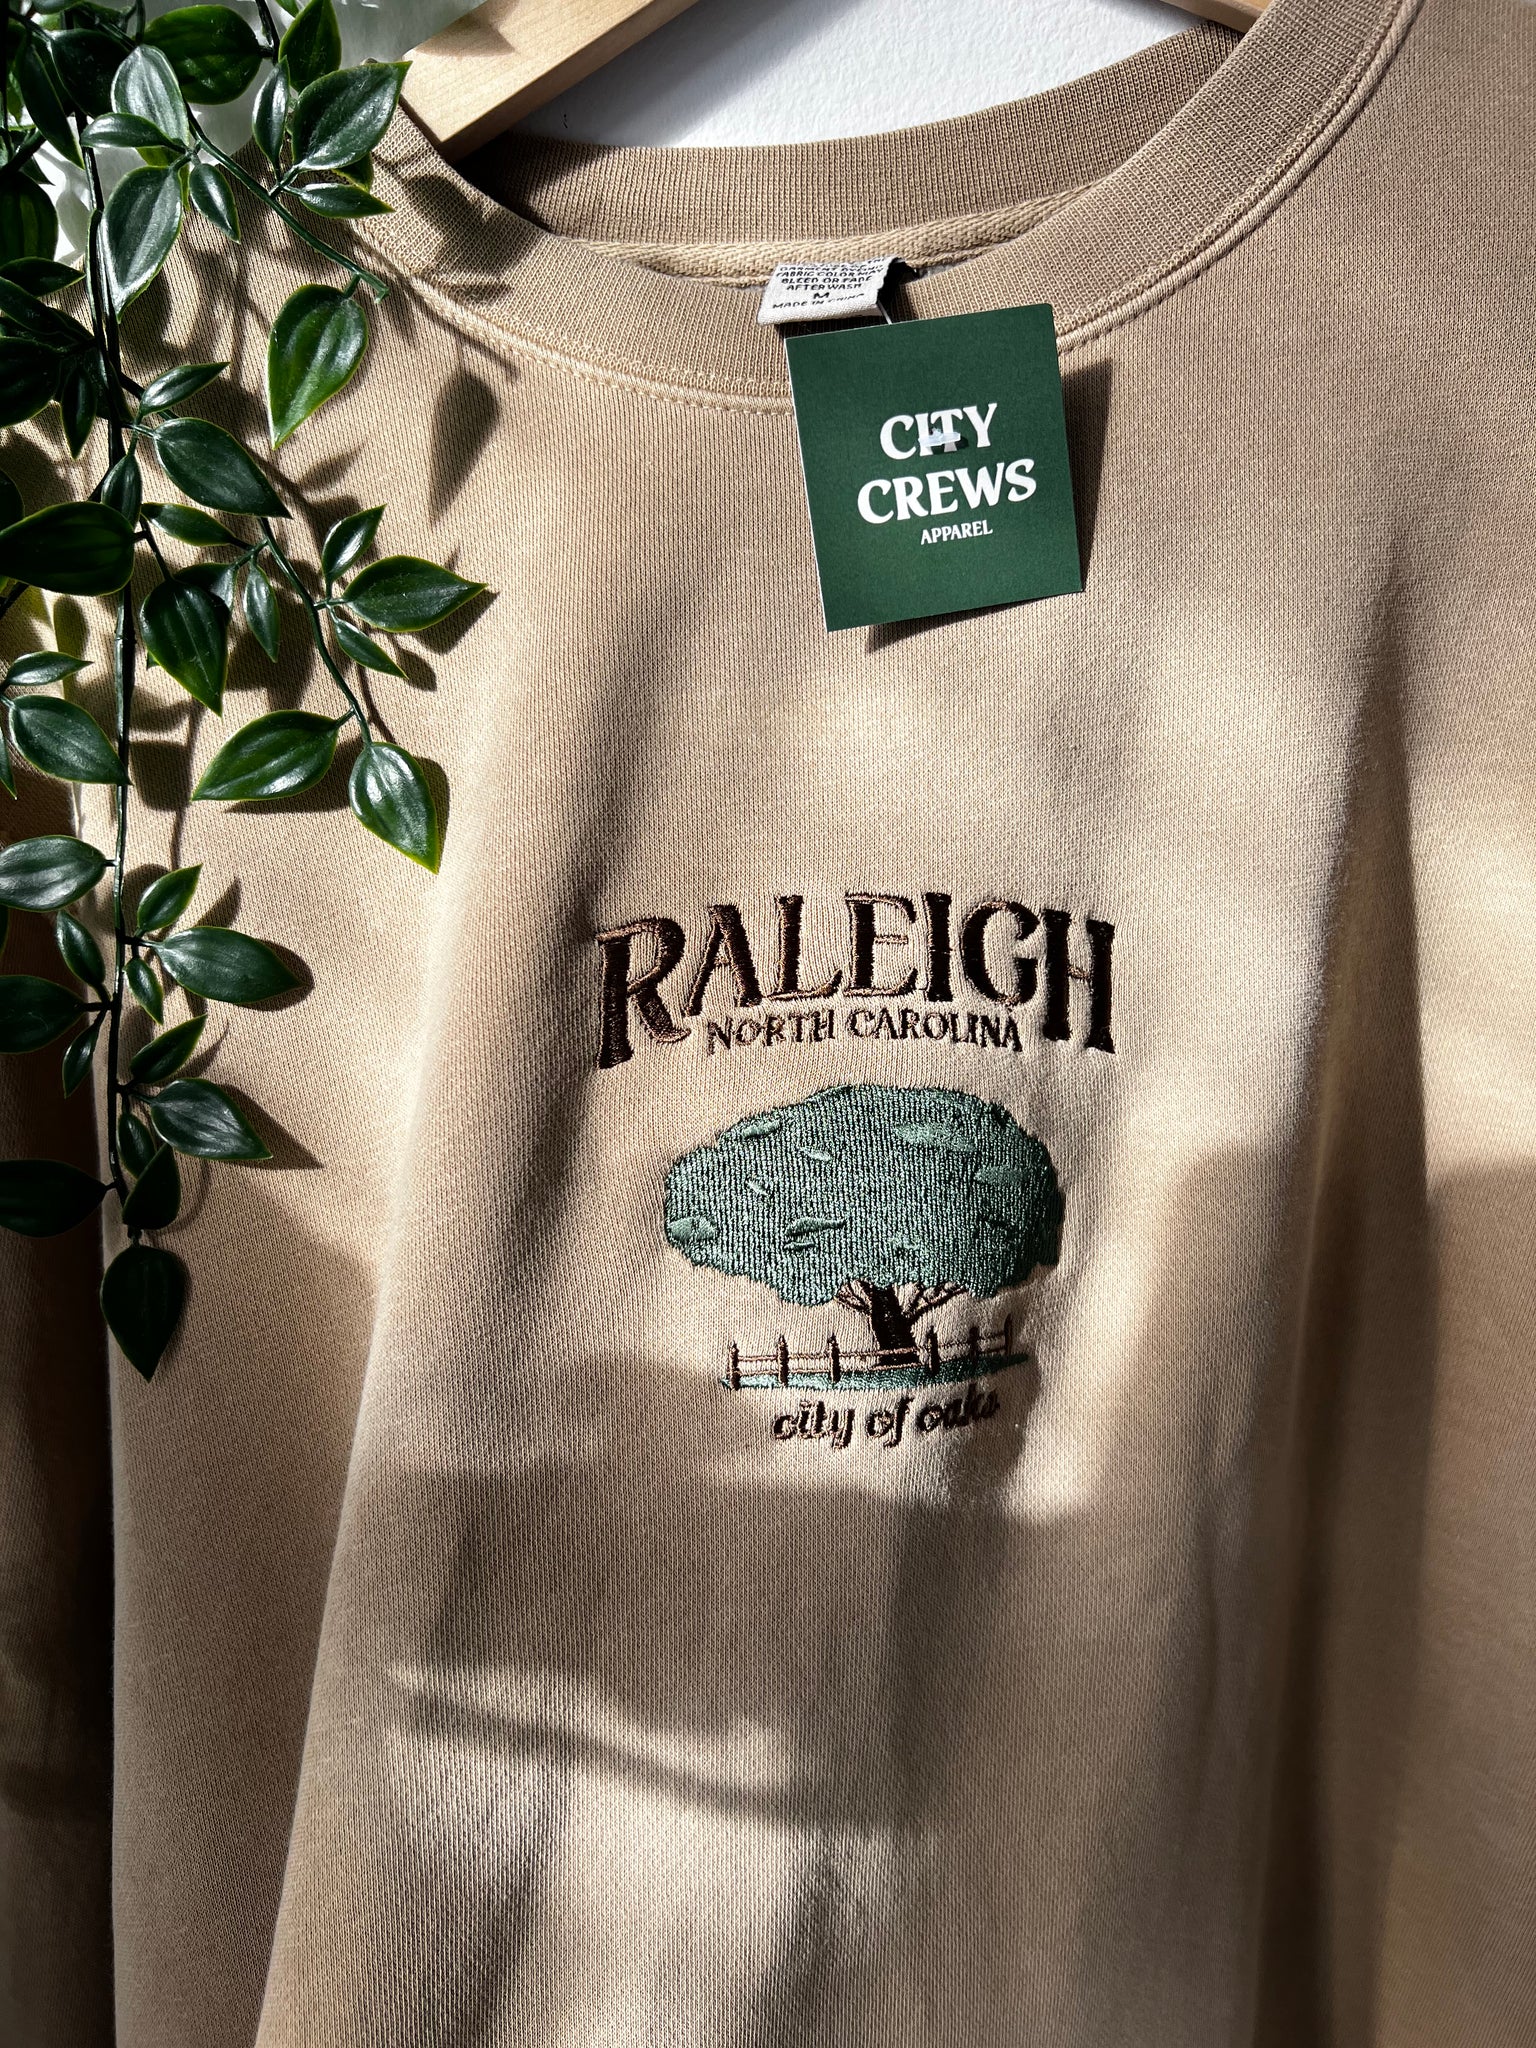 Raleigh, North Carolina embroidered crew